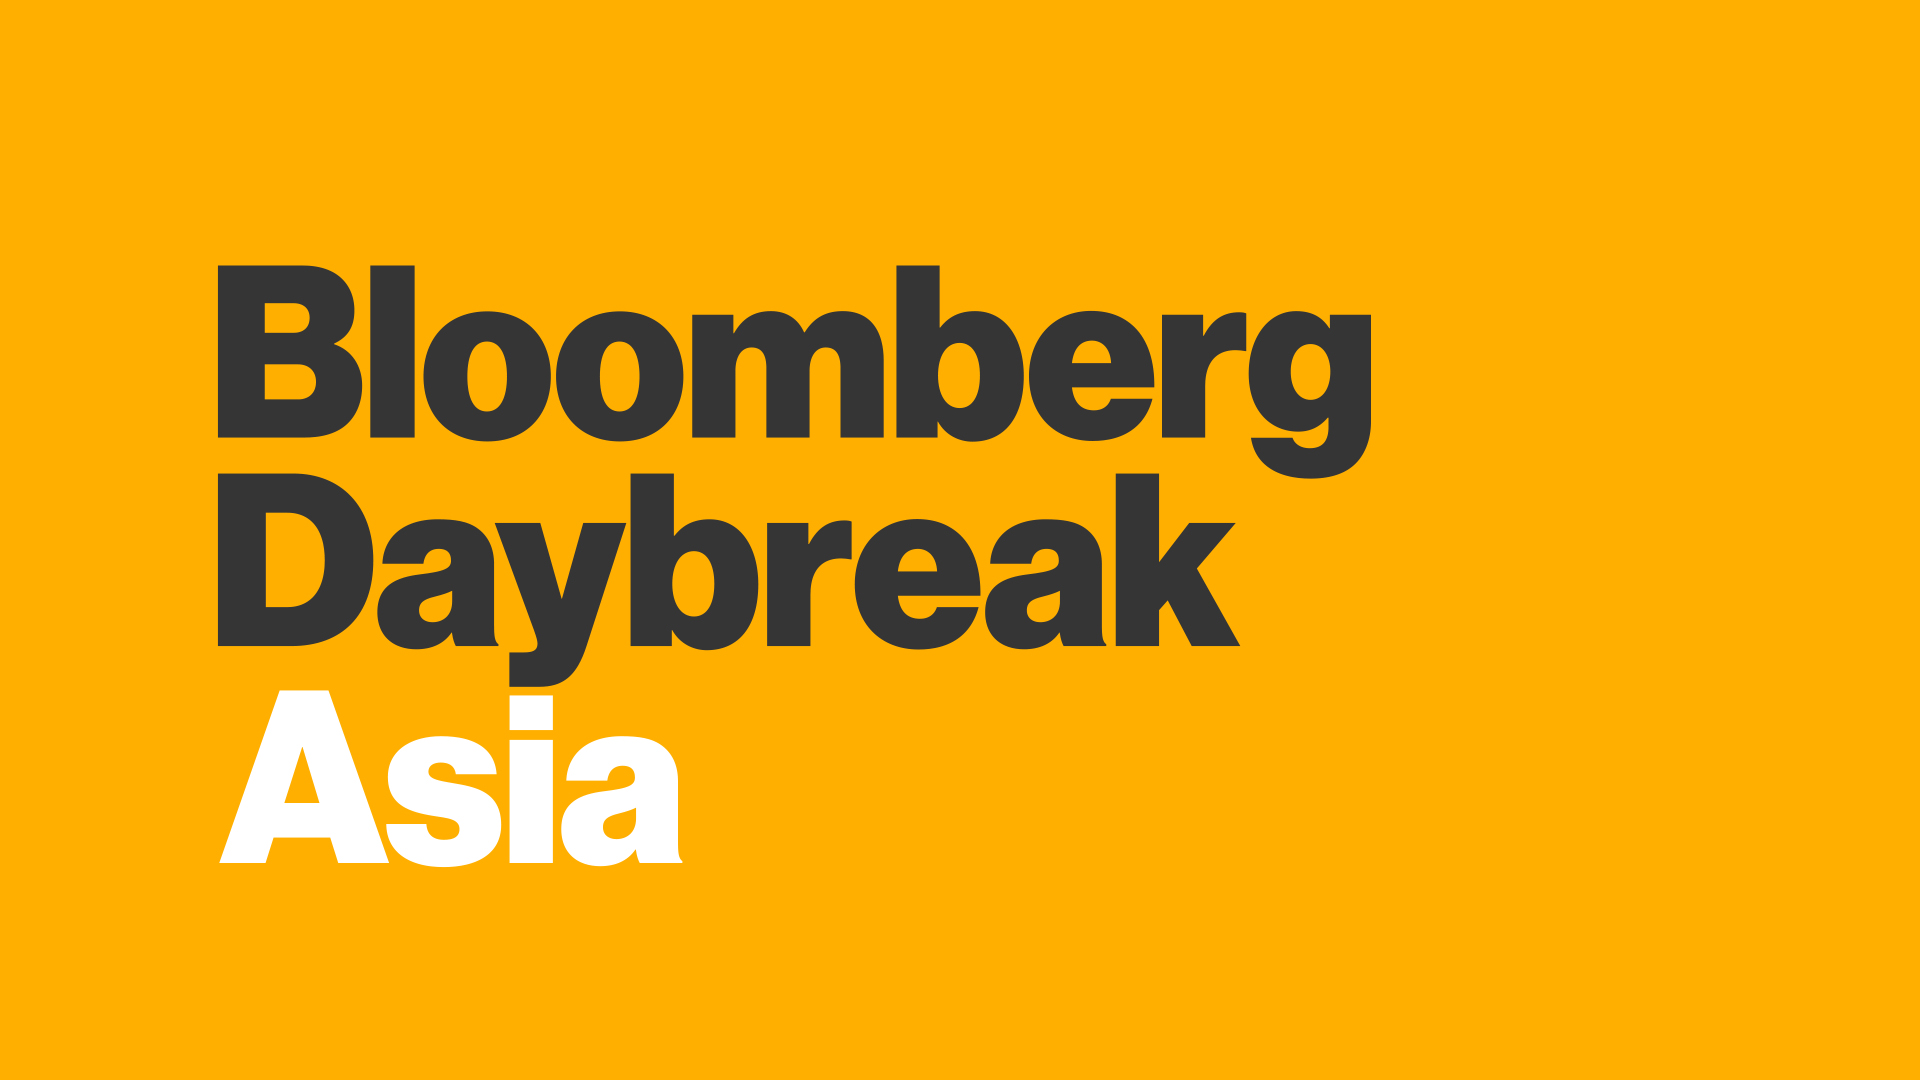 Bloomberg Daybreak Asia